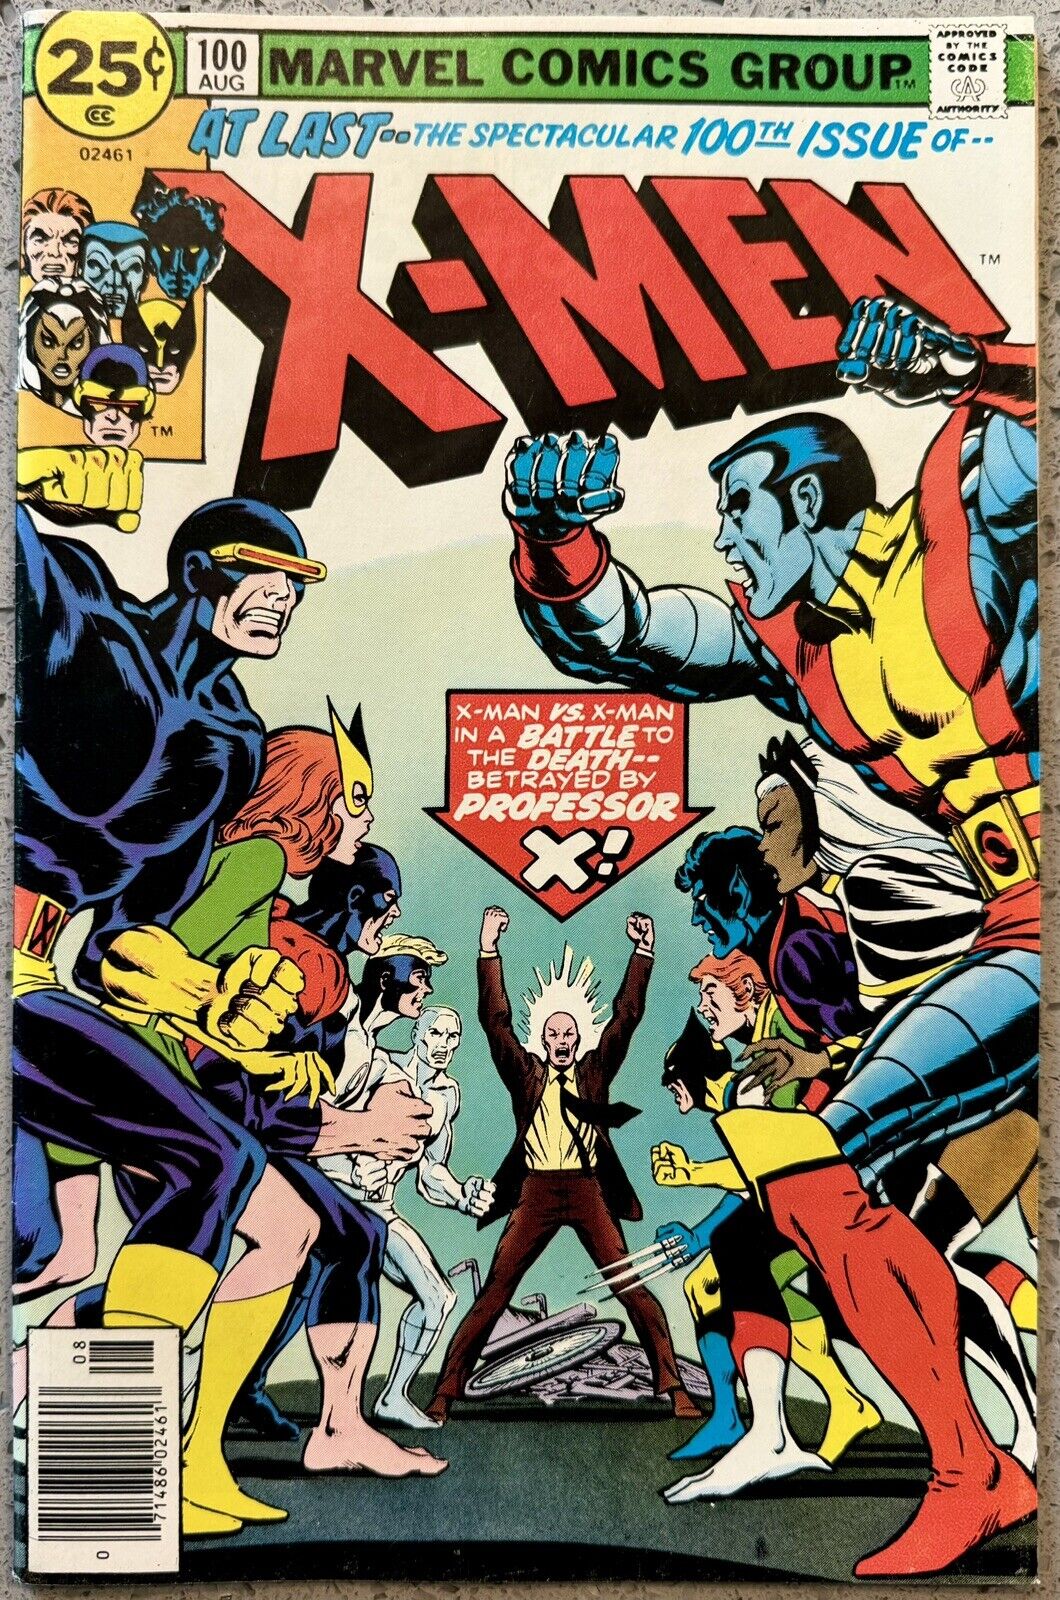 UNCANNY X-MEN #100 Newsstand ☄️ 1st Wolverine + Colossus 